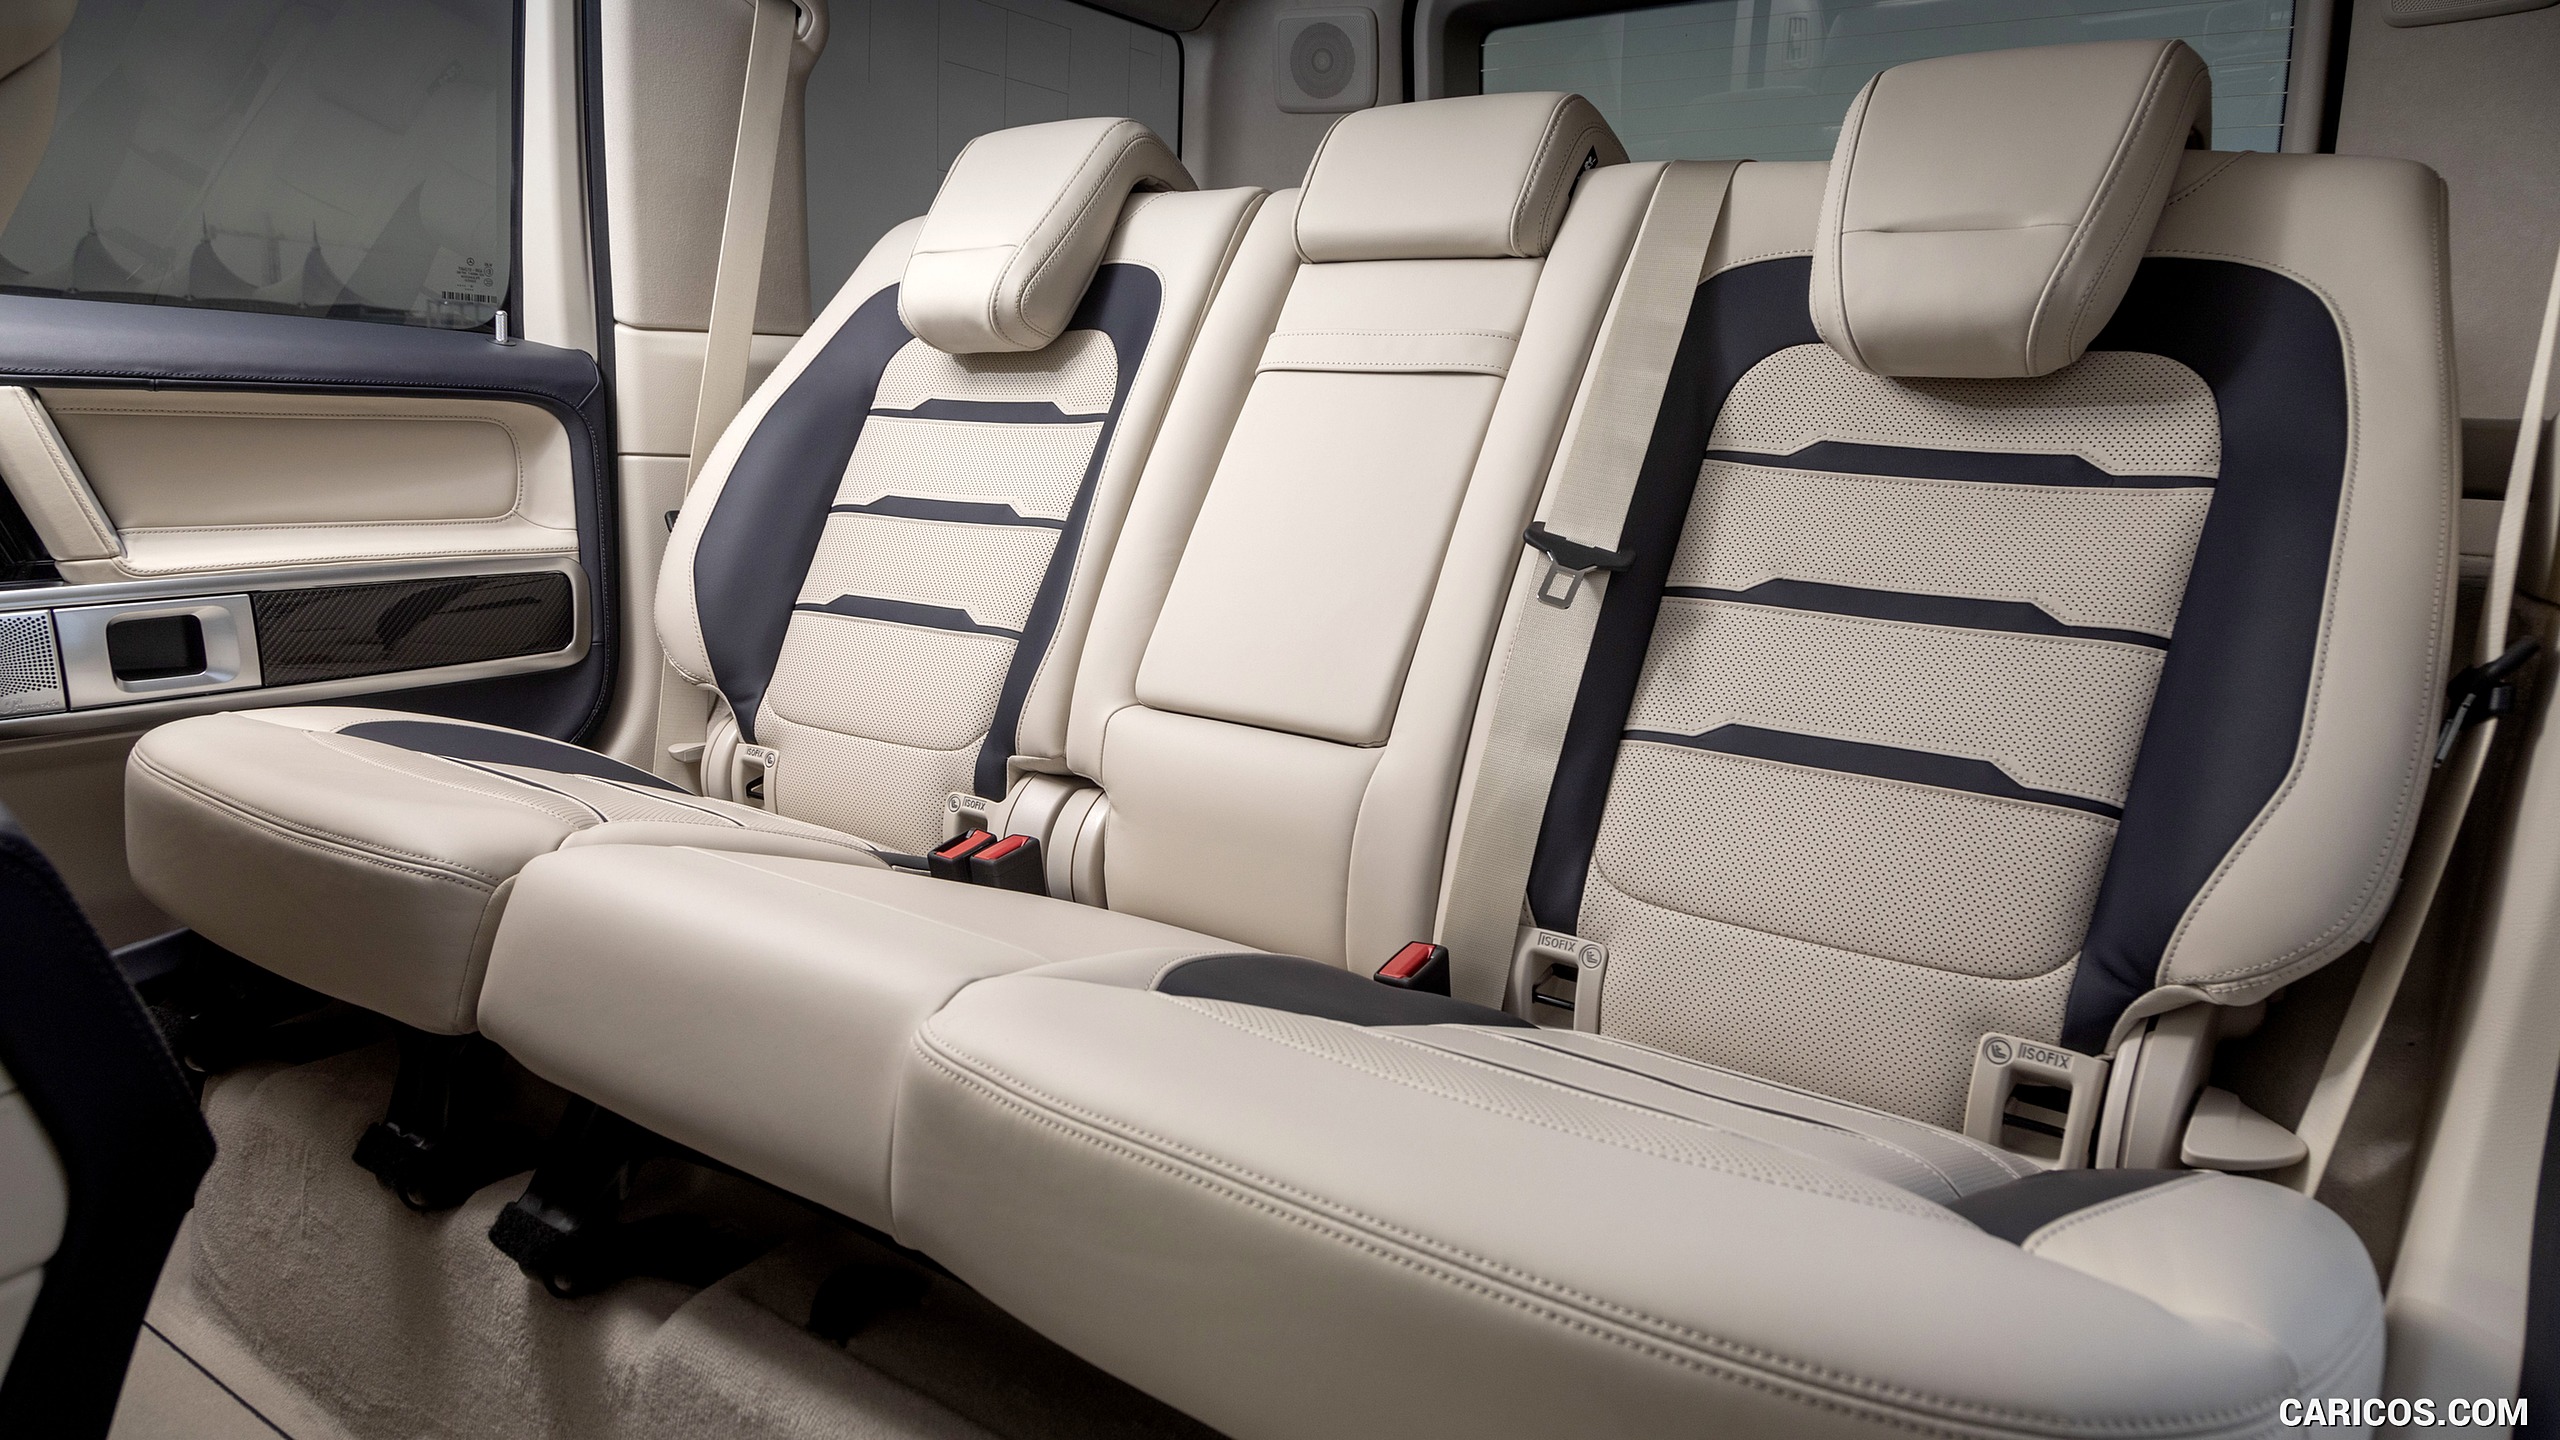 2020 Mercedes-AMG G 63 Cigarette Edition - Interior, Rear Seats, #13 of 14